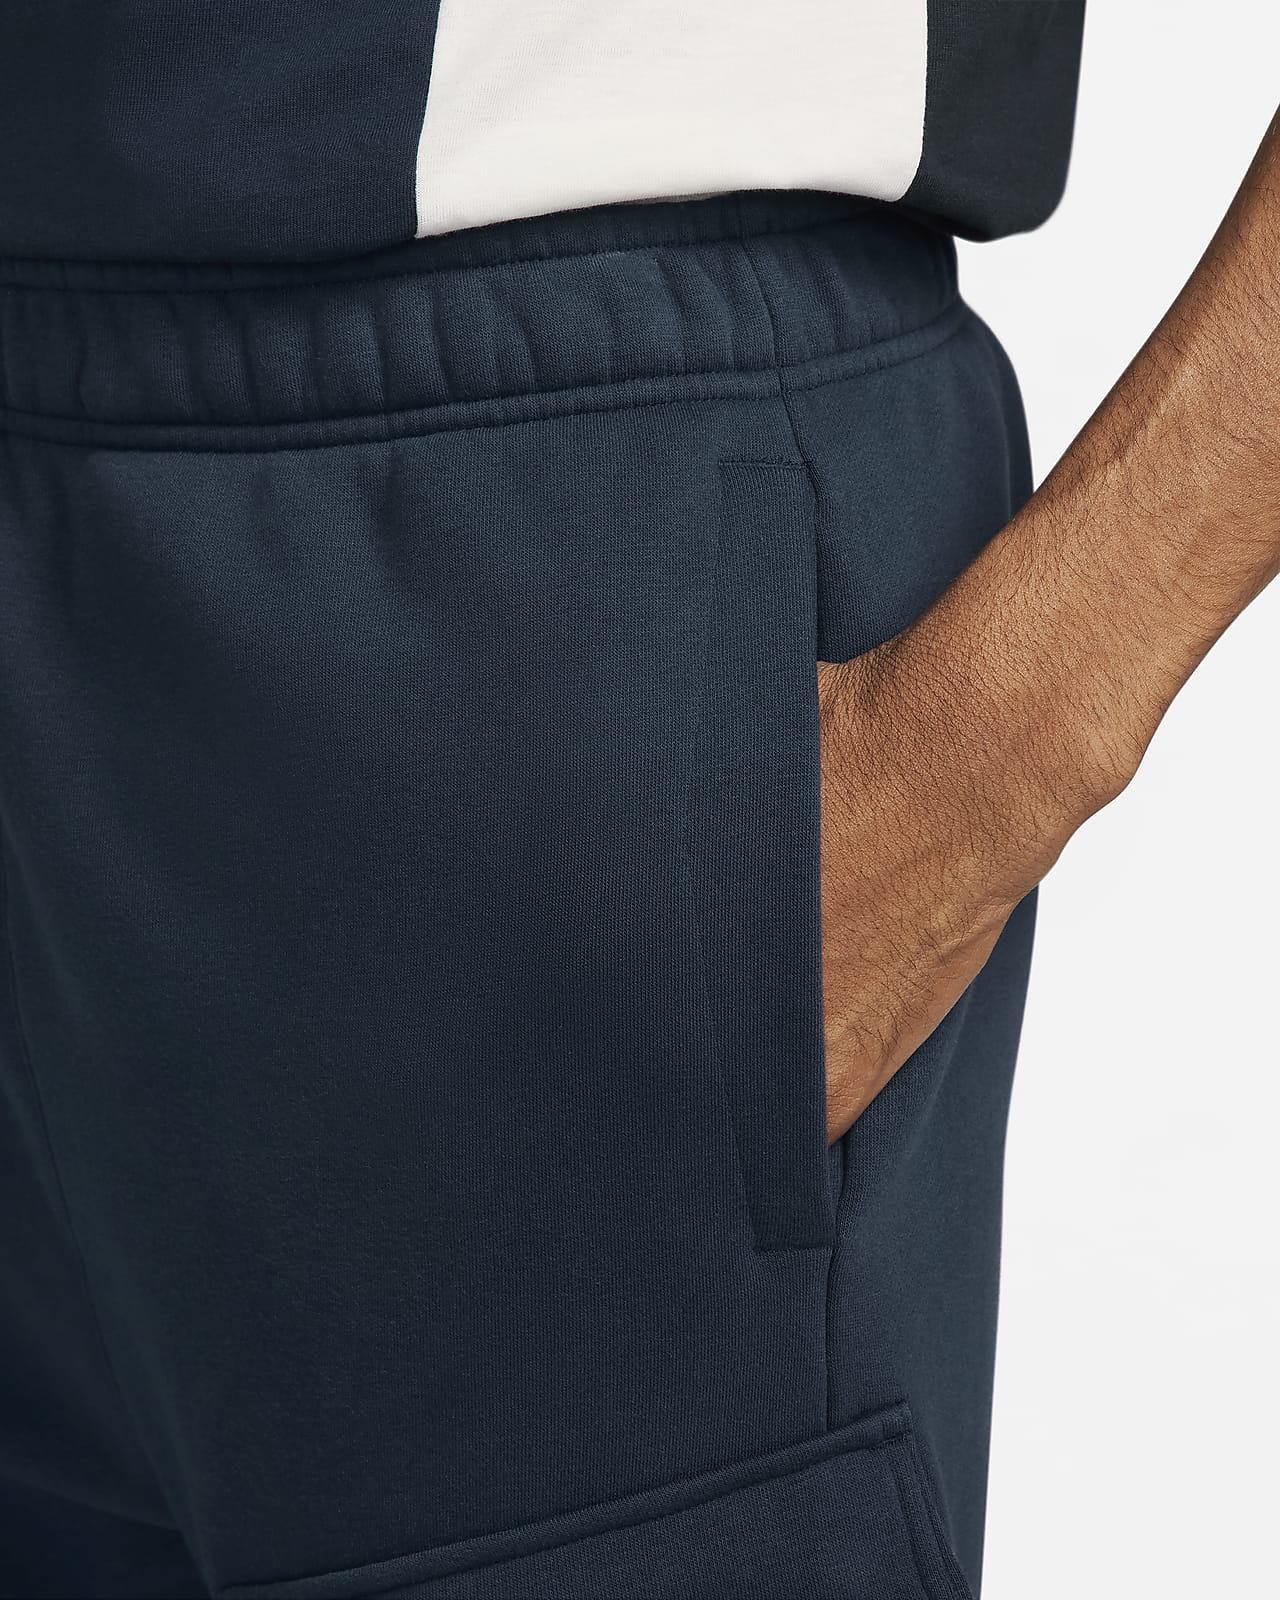 Nike Sportswear Club Fleece Cargo Pants Charcoal Heather/Anthracite/White  Men's - US